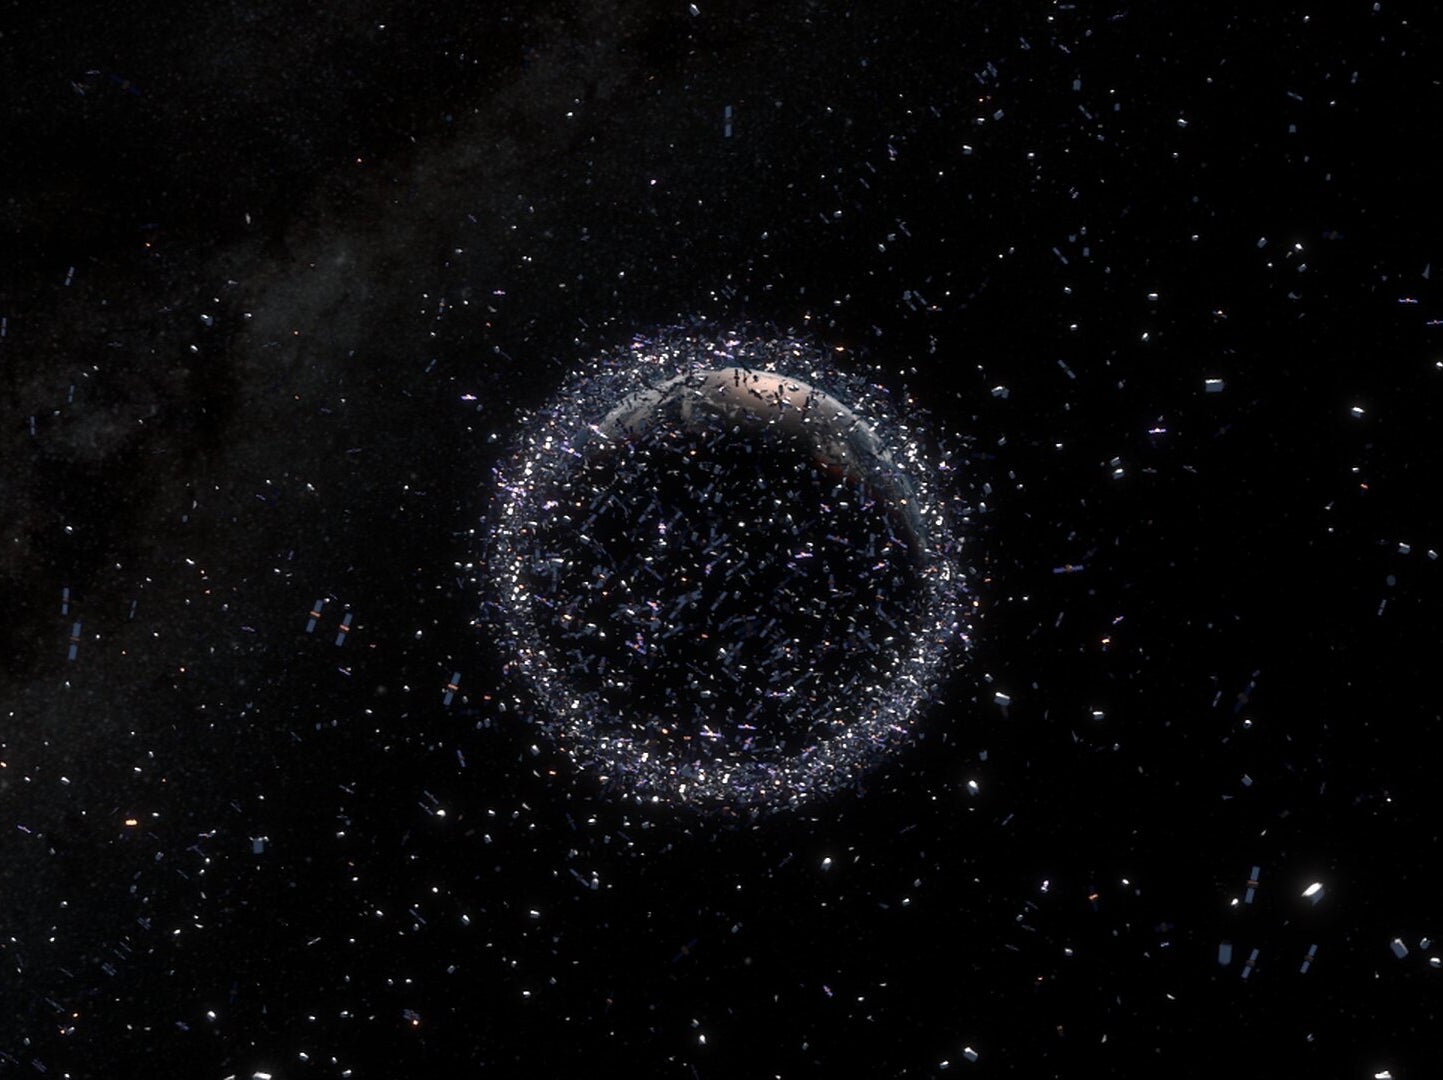 Representational image of space debris